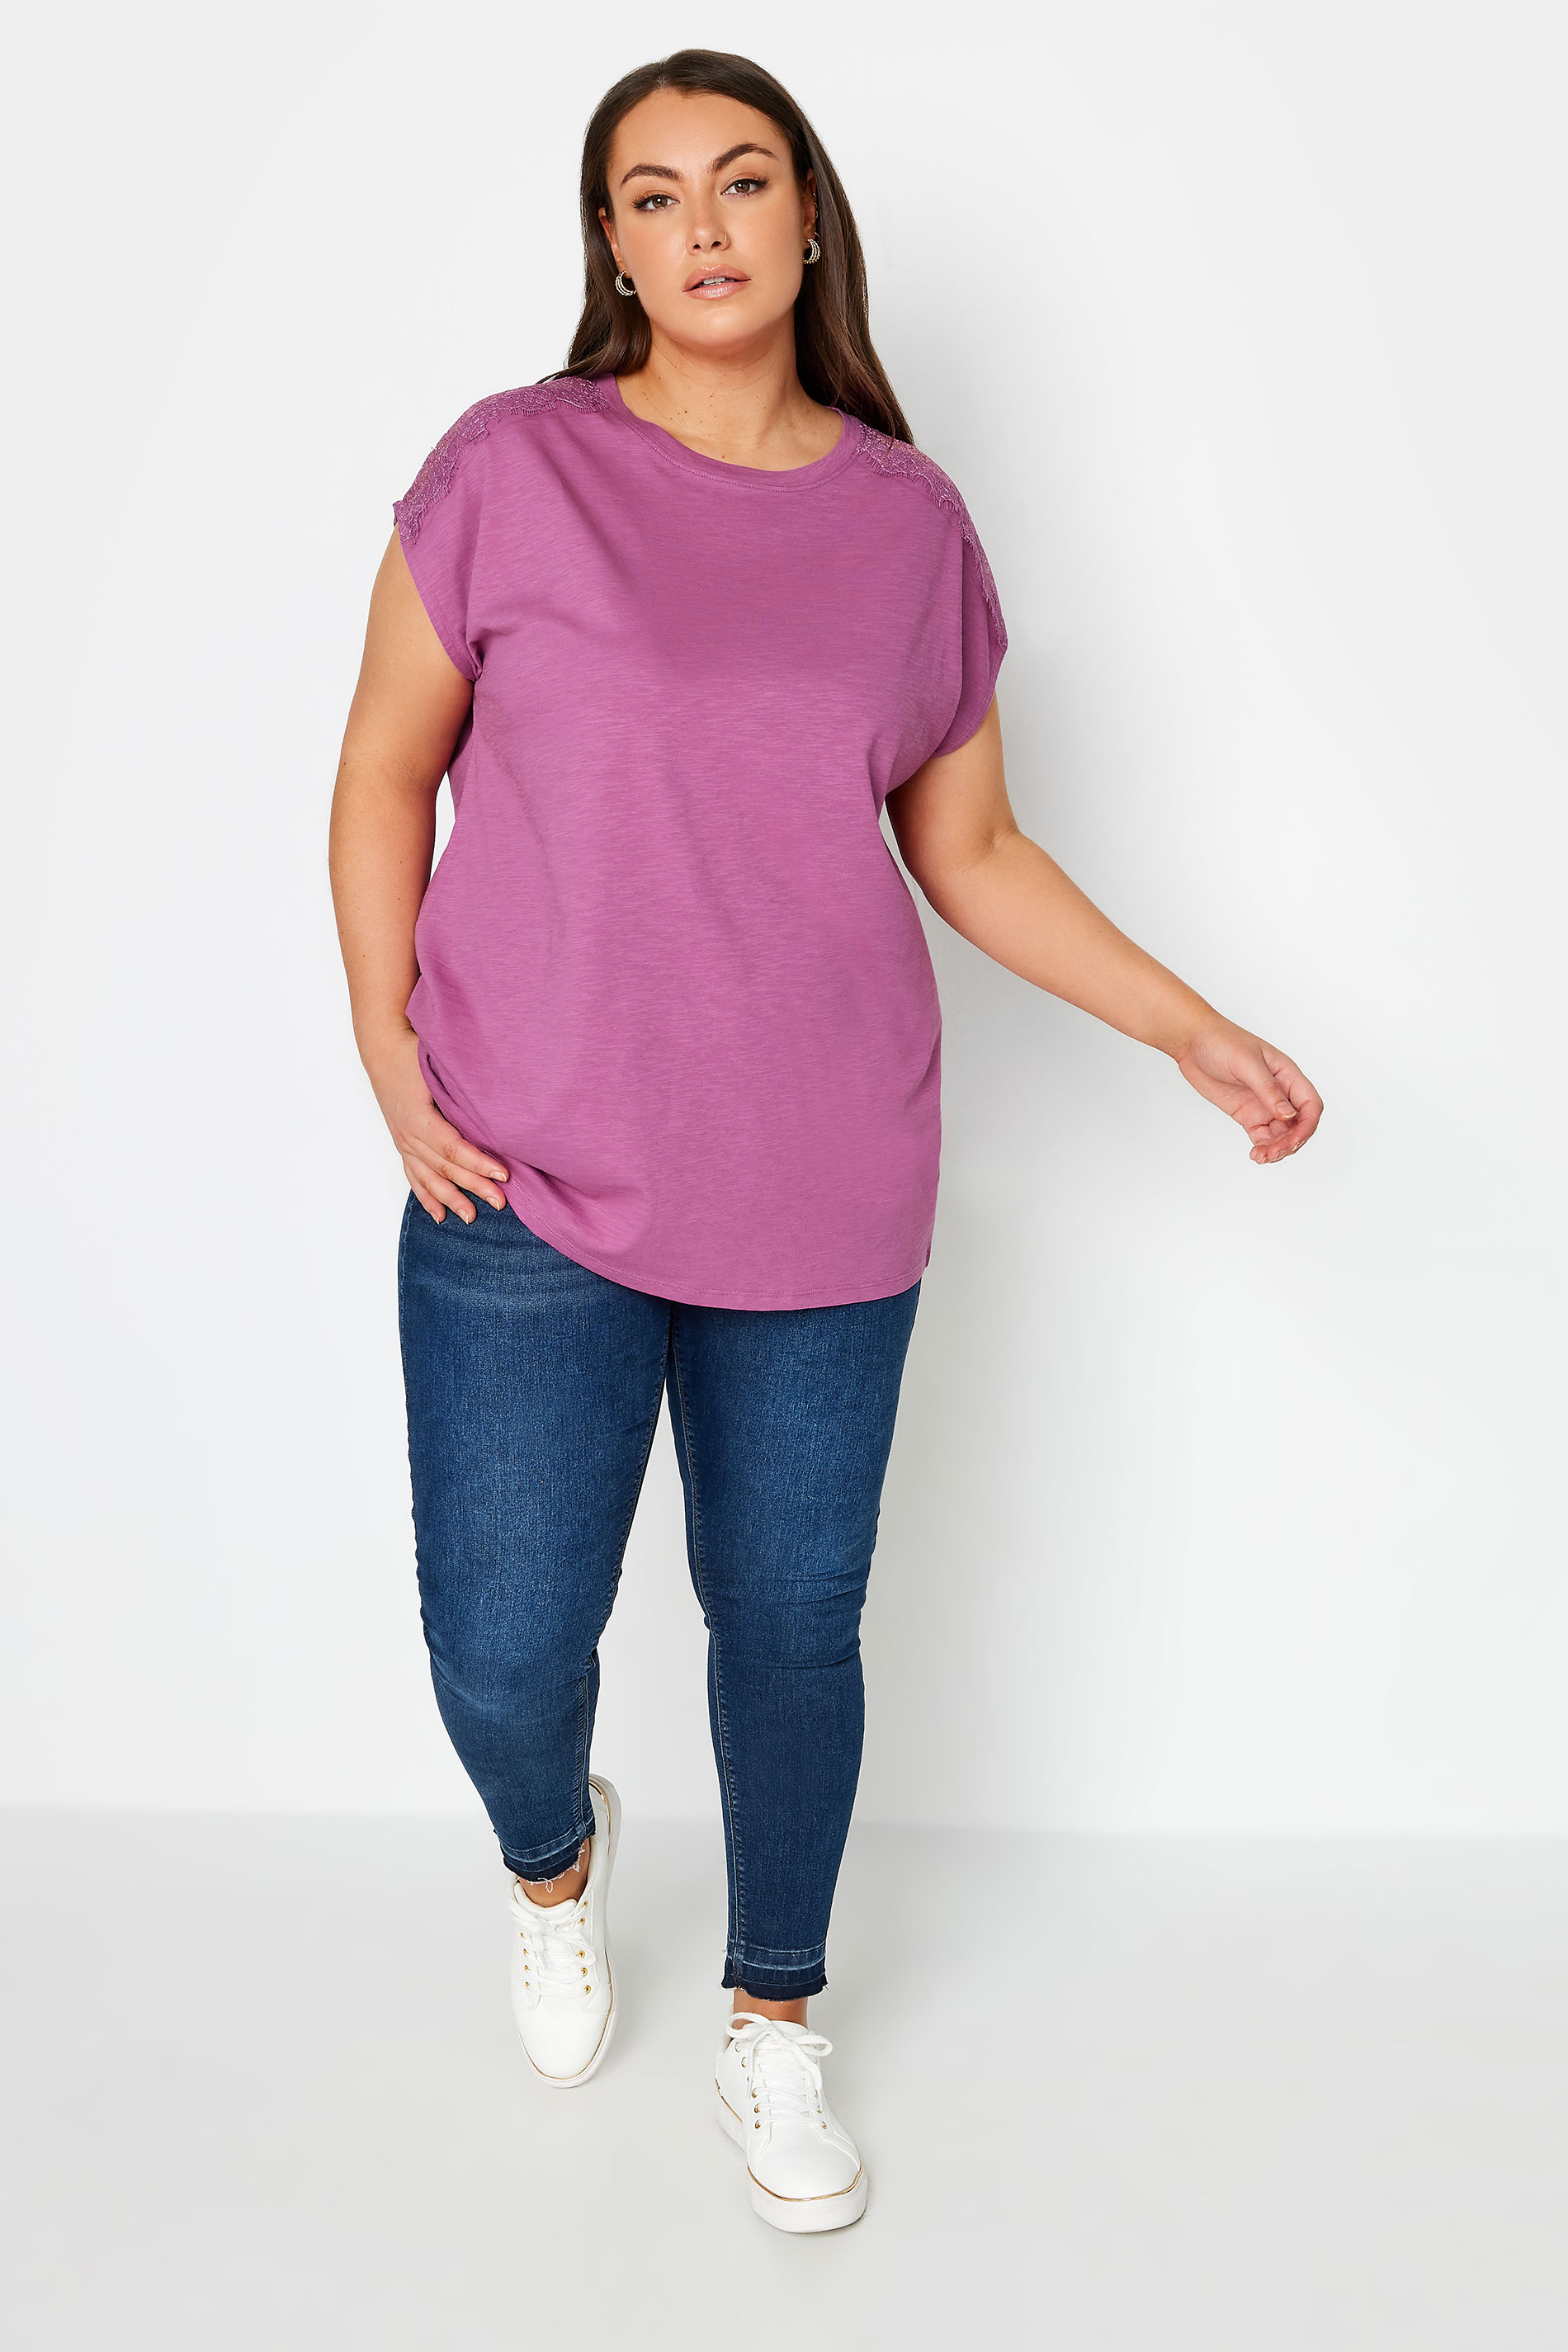 YOURS Plus Size Purple Lace Shoulder T-Shirt | Yours Clothing 2